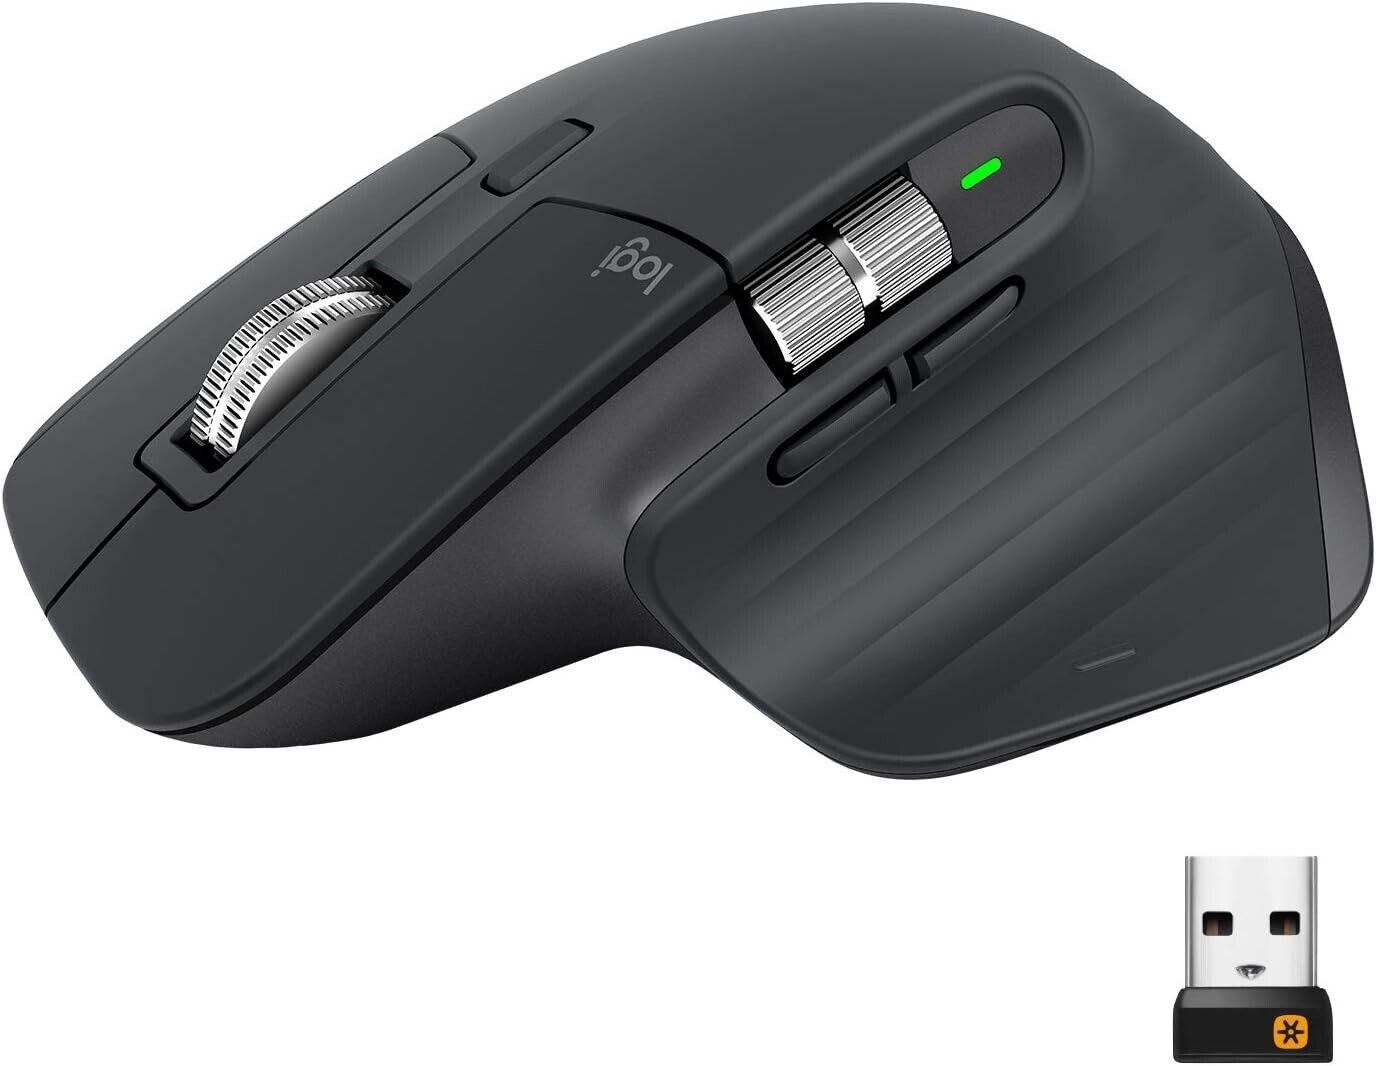 Logitech MX Master 3 Advanced Wireless Mouse & USB Receiver 910-005647 Black